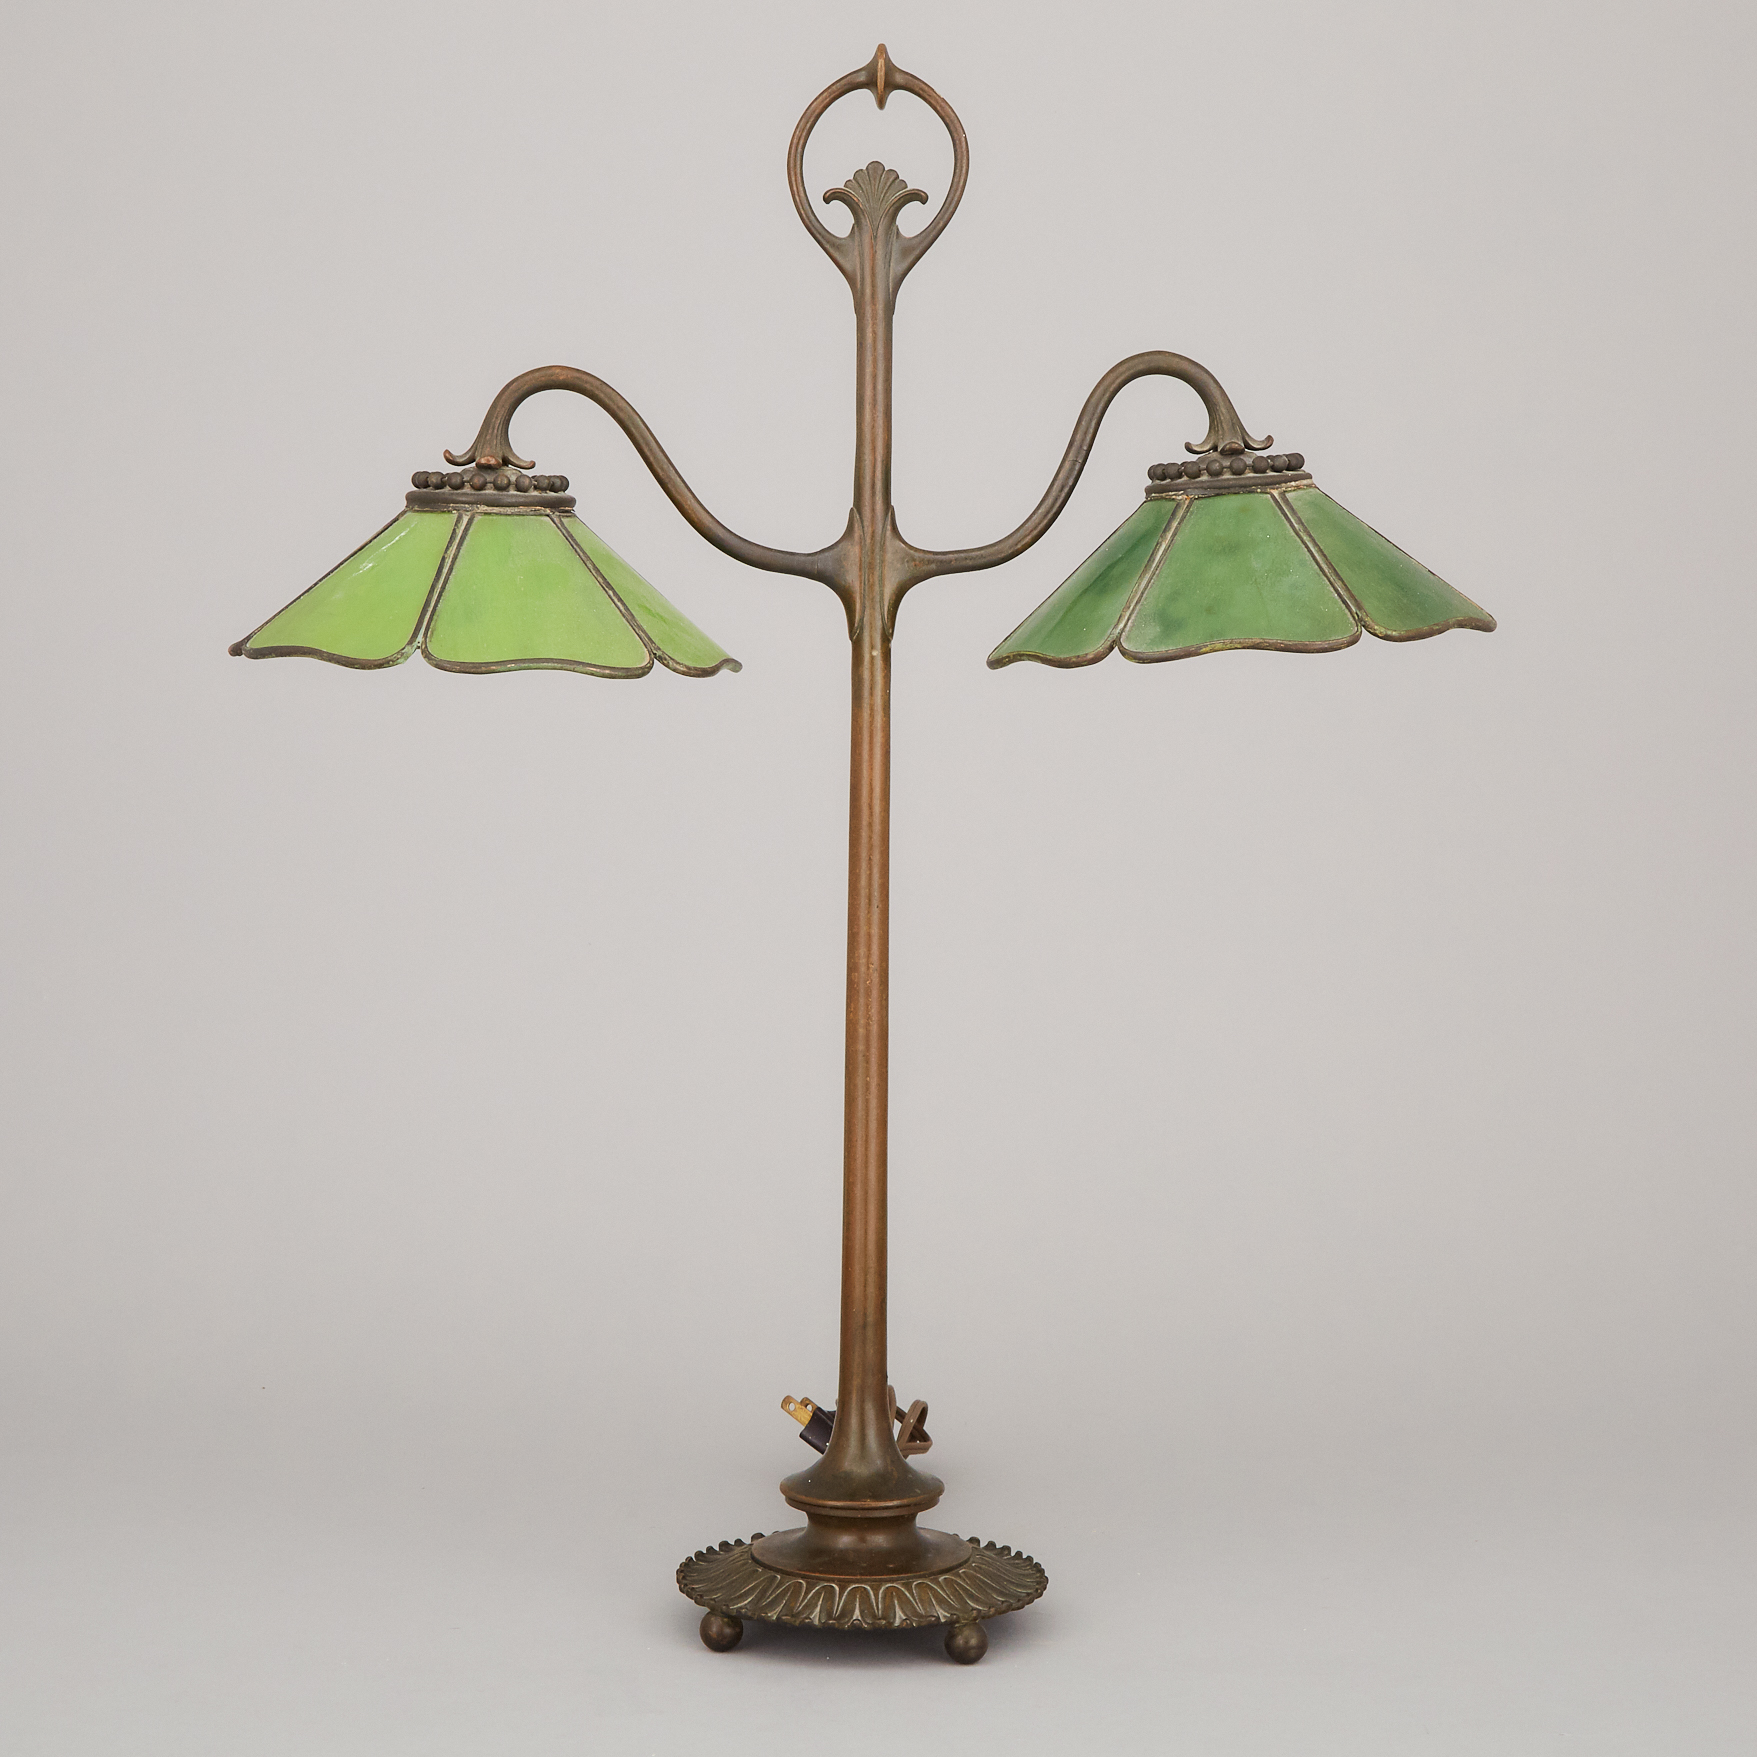 Tiffany Studios Style Bronze Desk Lamp, 20th century